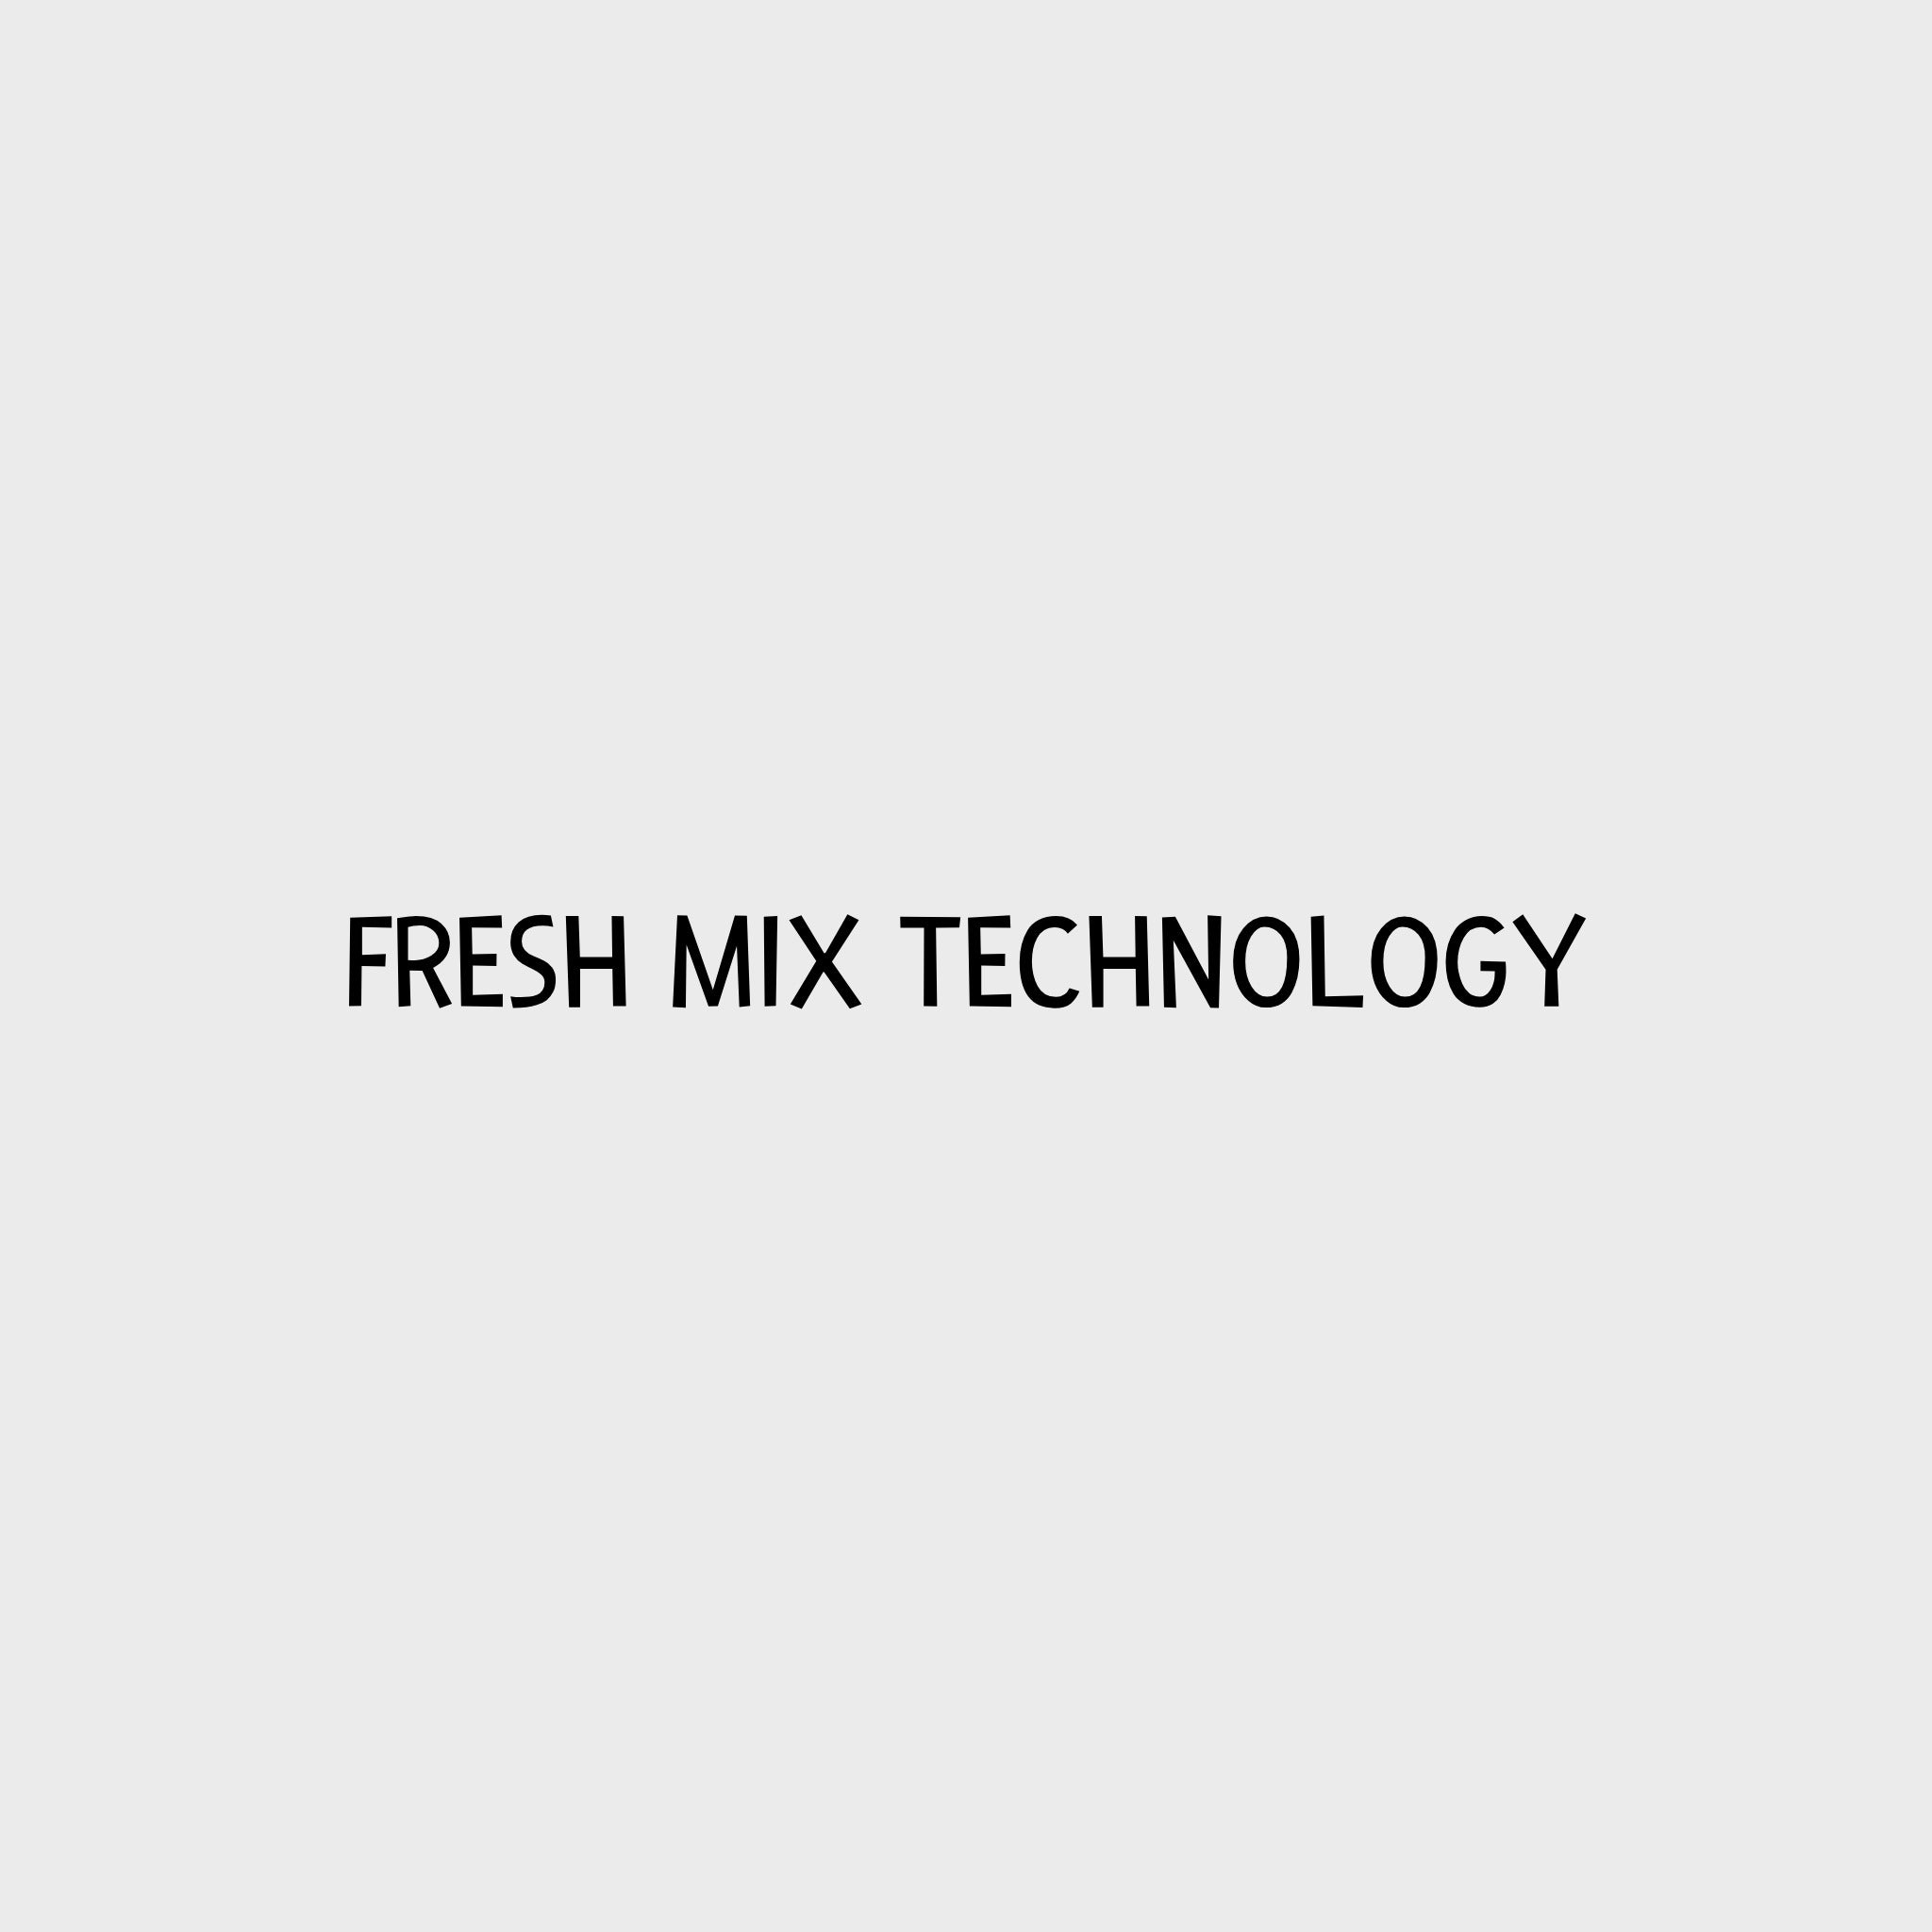 Video - The Goodstuff - Fresh Mix Technology